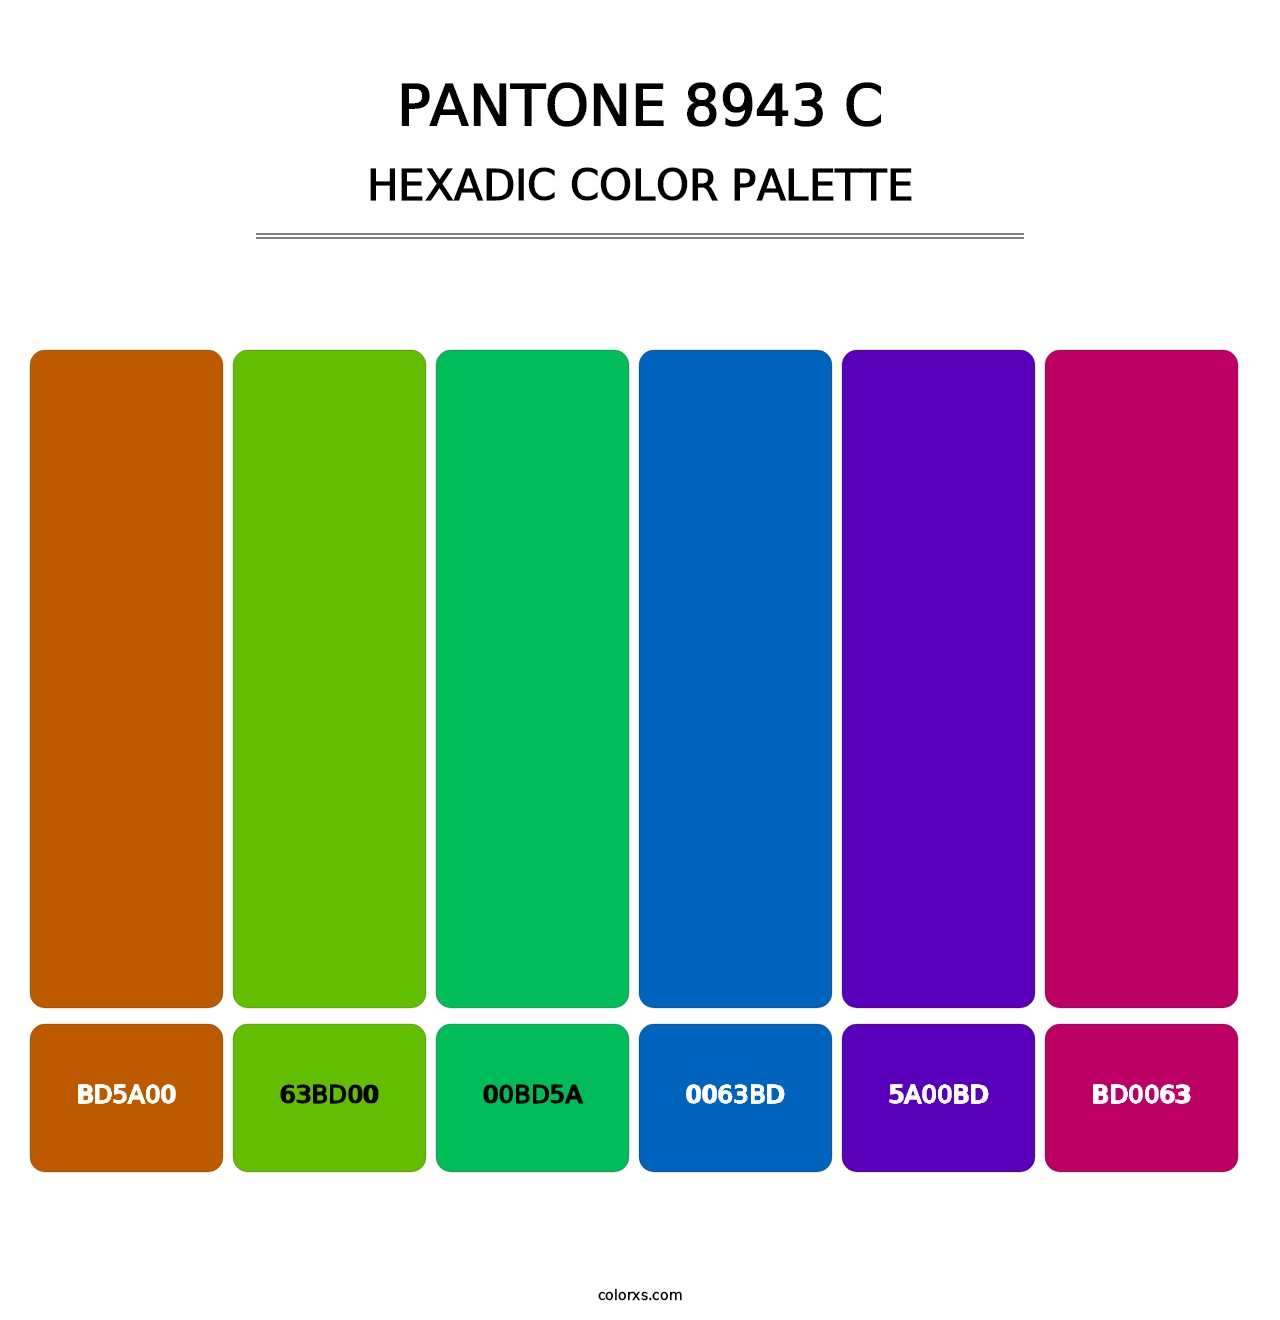 PANTONE 8943 C - Hexadic Color Palette